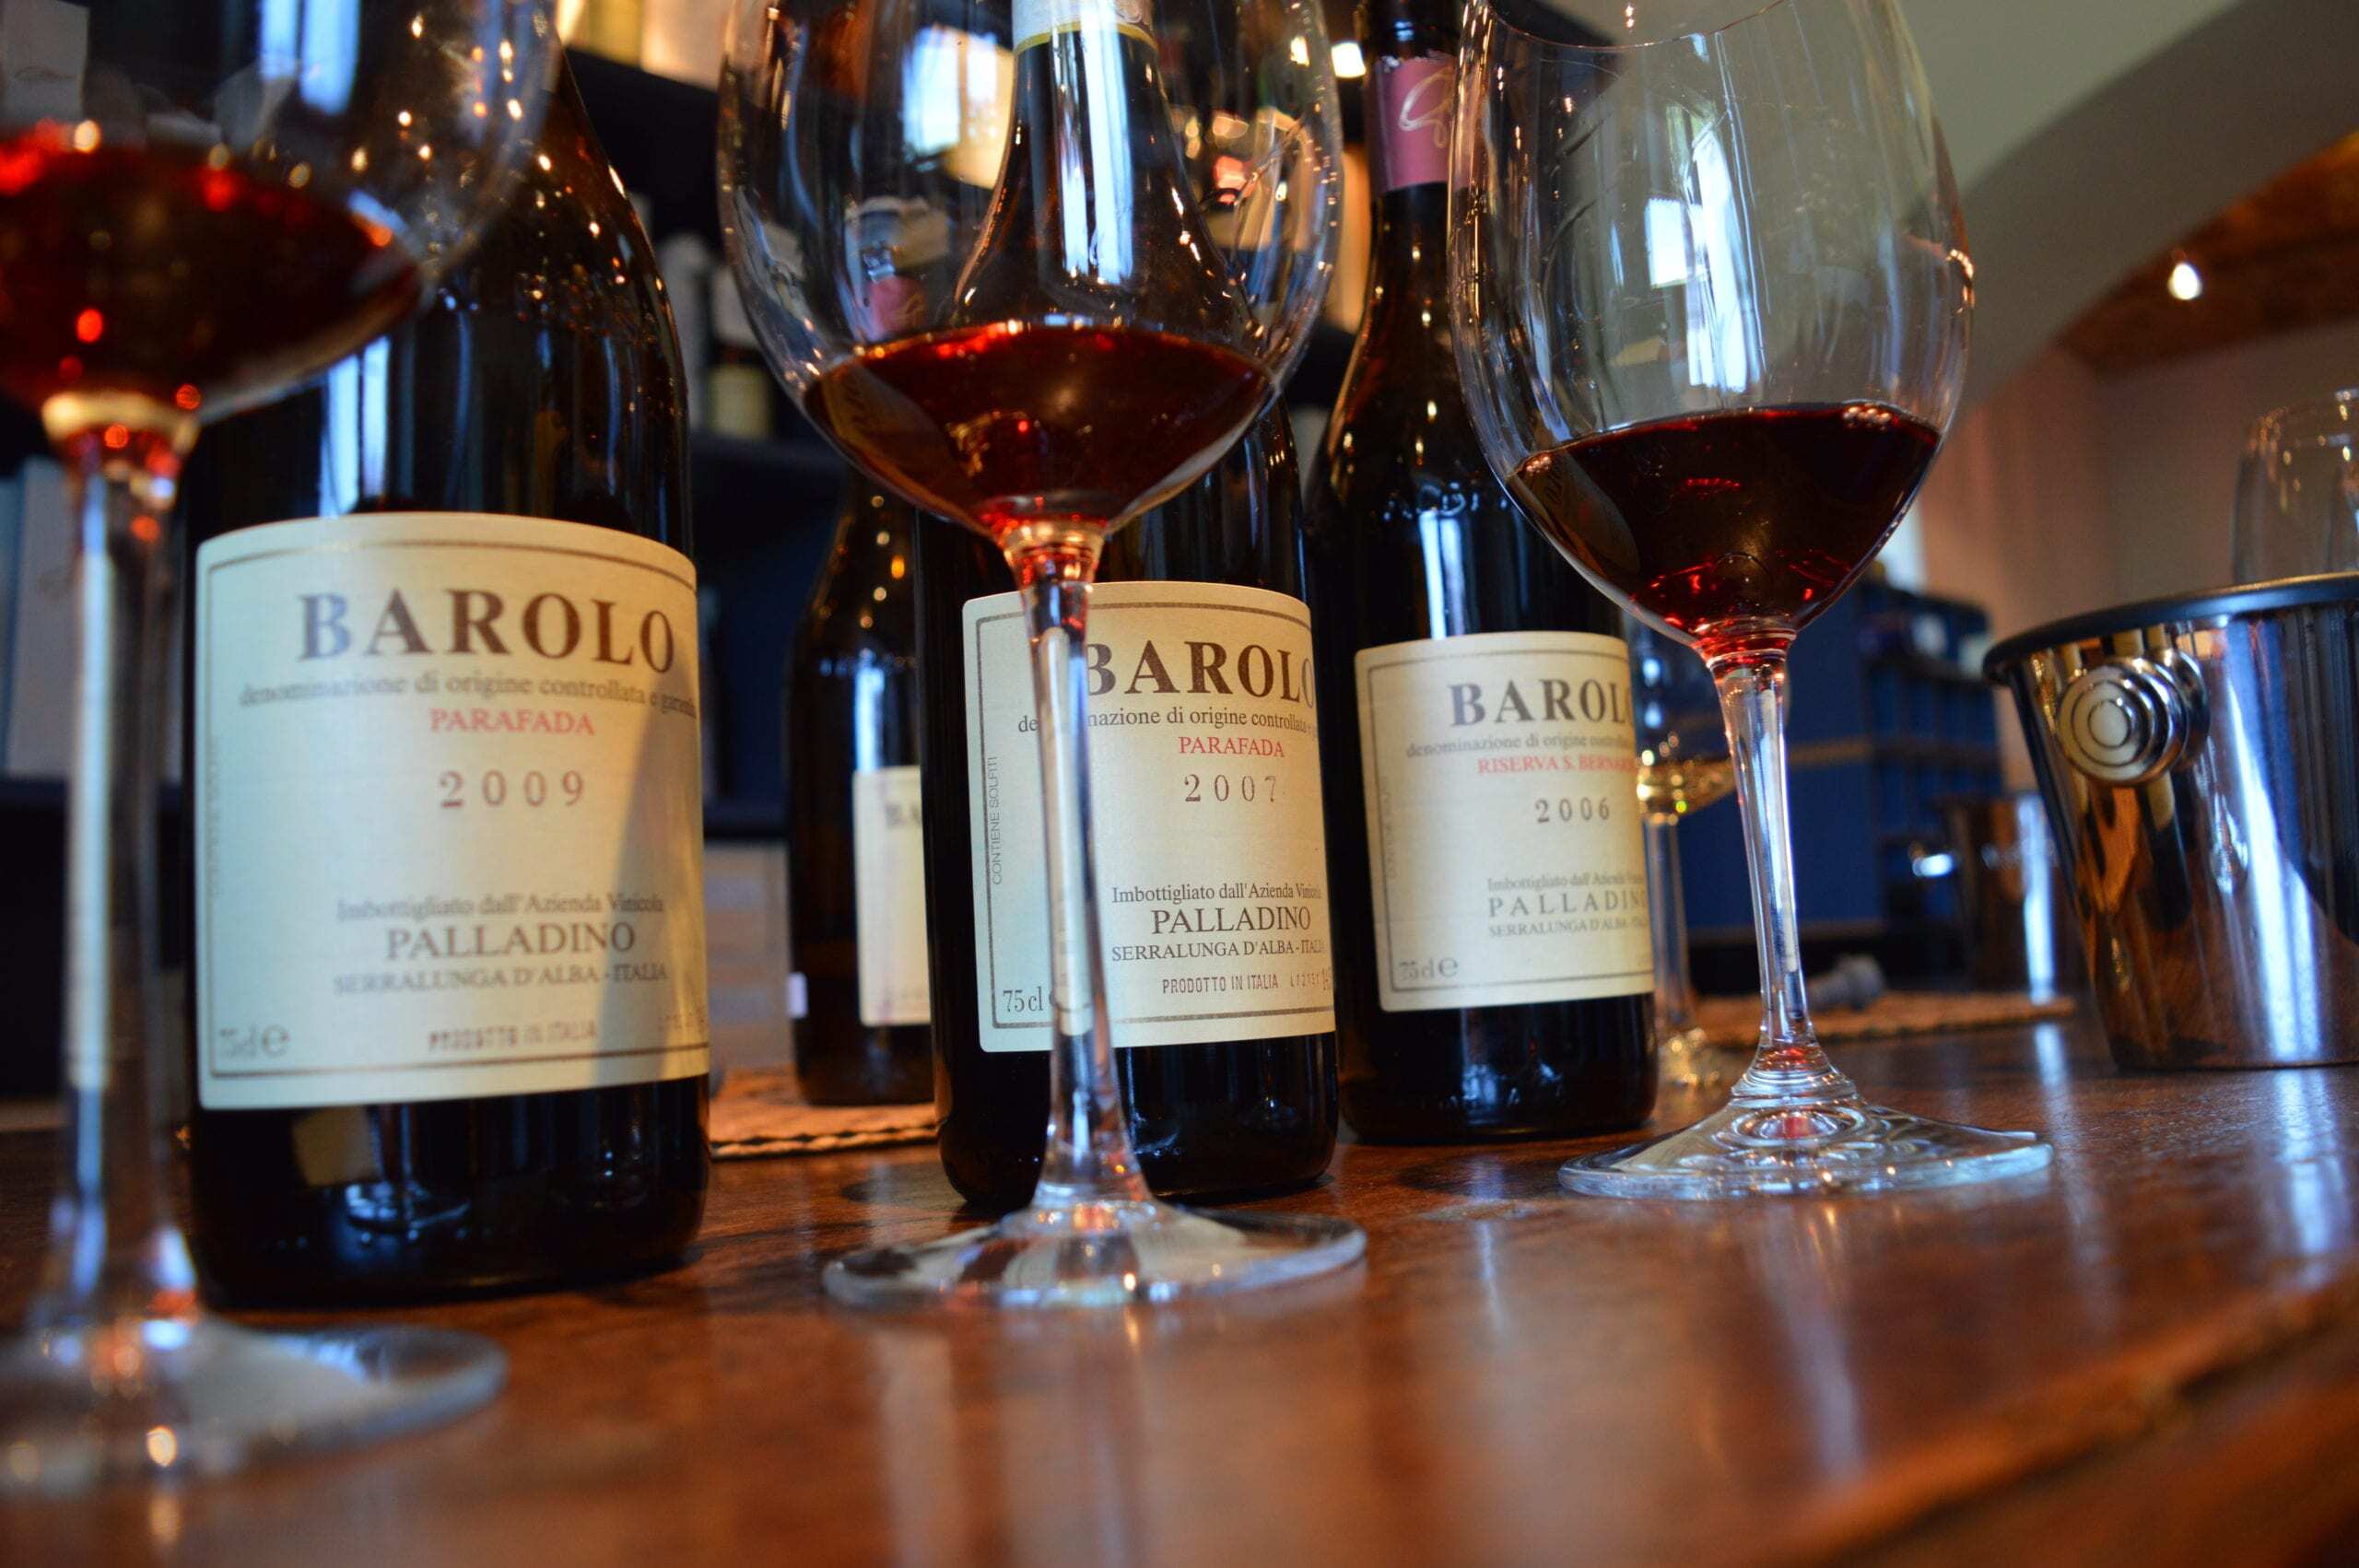 Barolo wine pairing tips